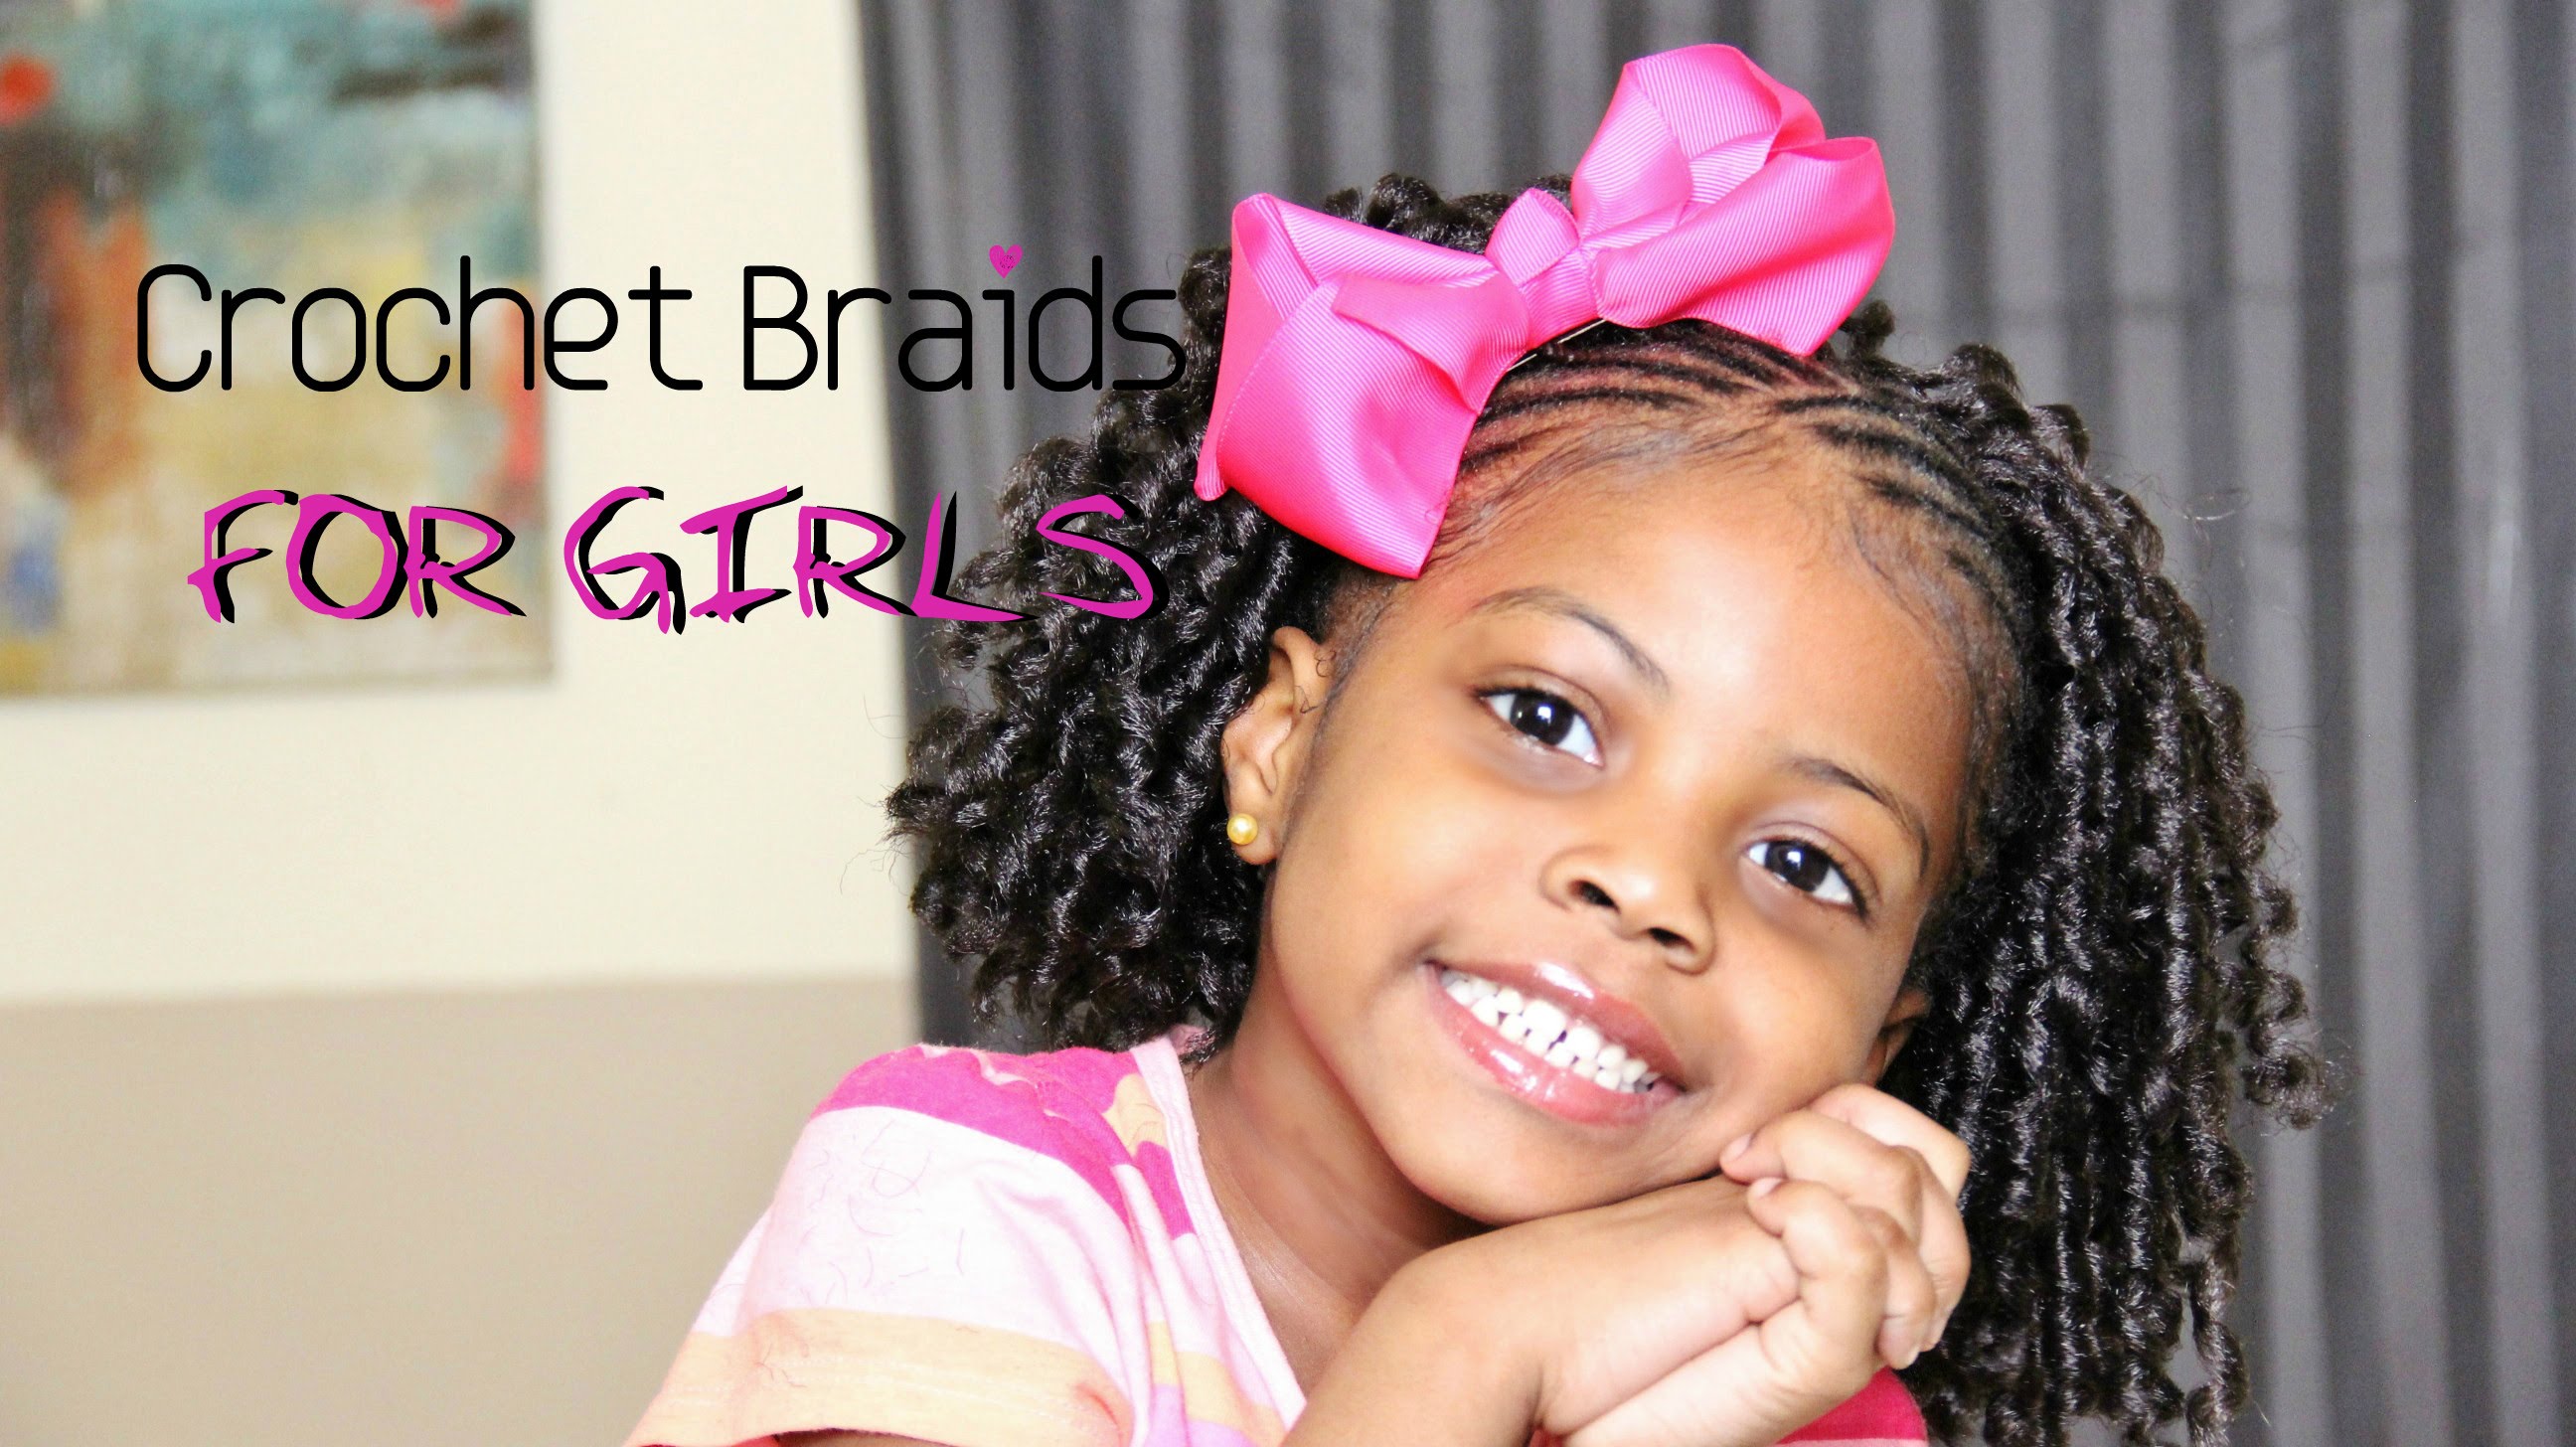 Cutest Crochet Braids for Little Girls! | TEEDAY6 - YouTube